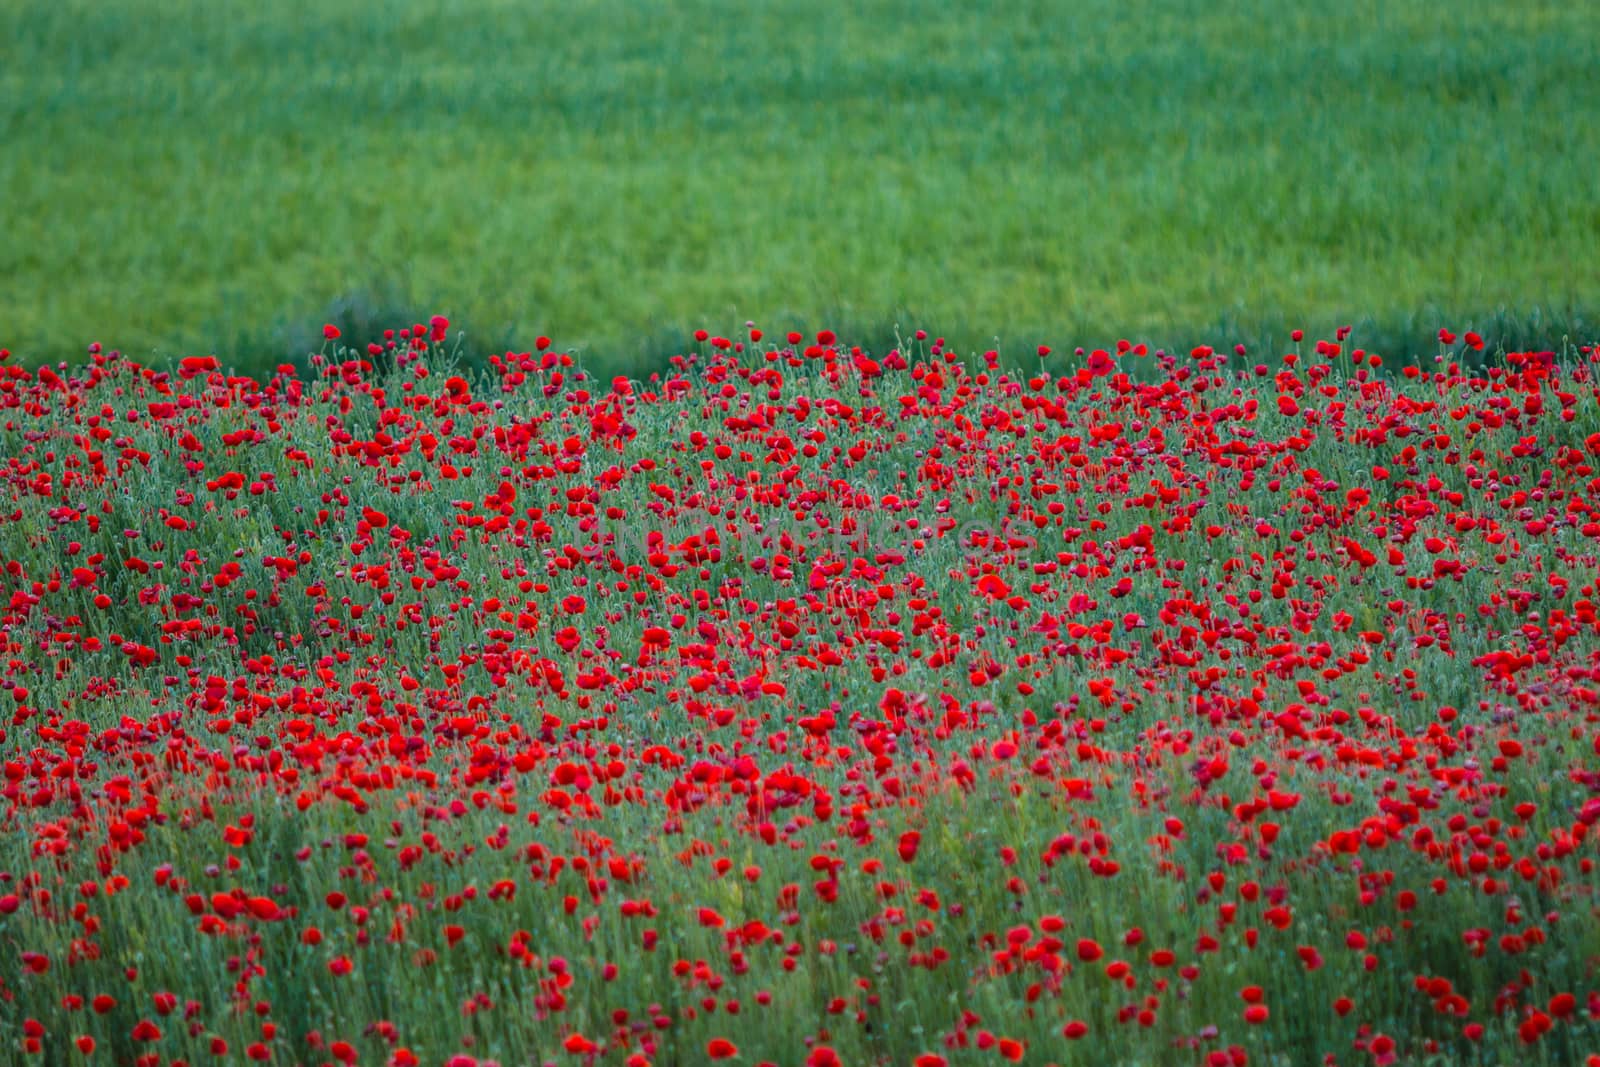 poppy flowers overwhelming a green meadow